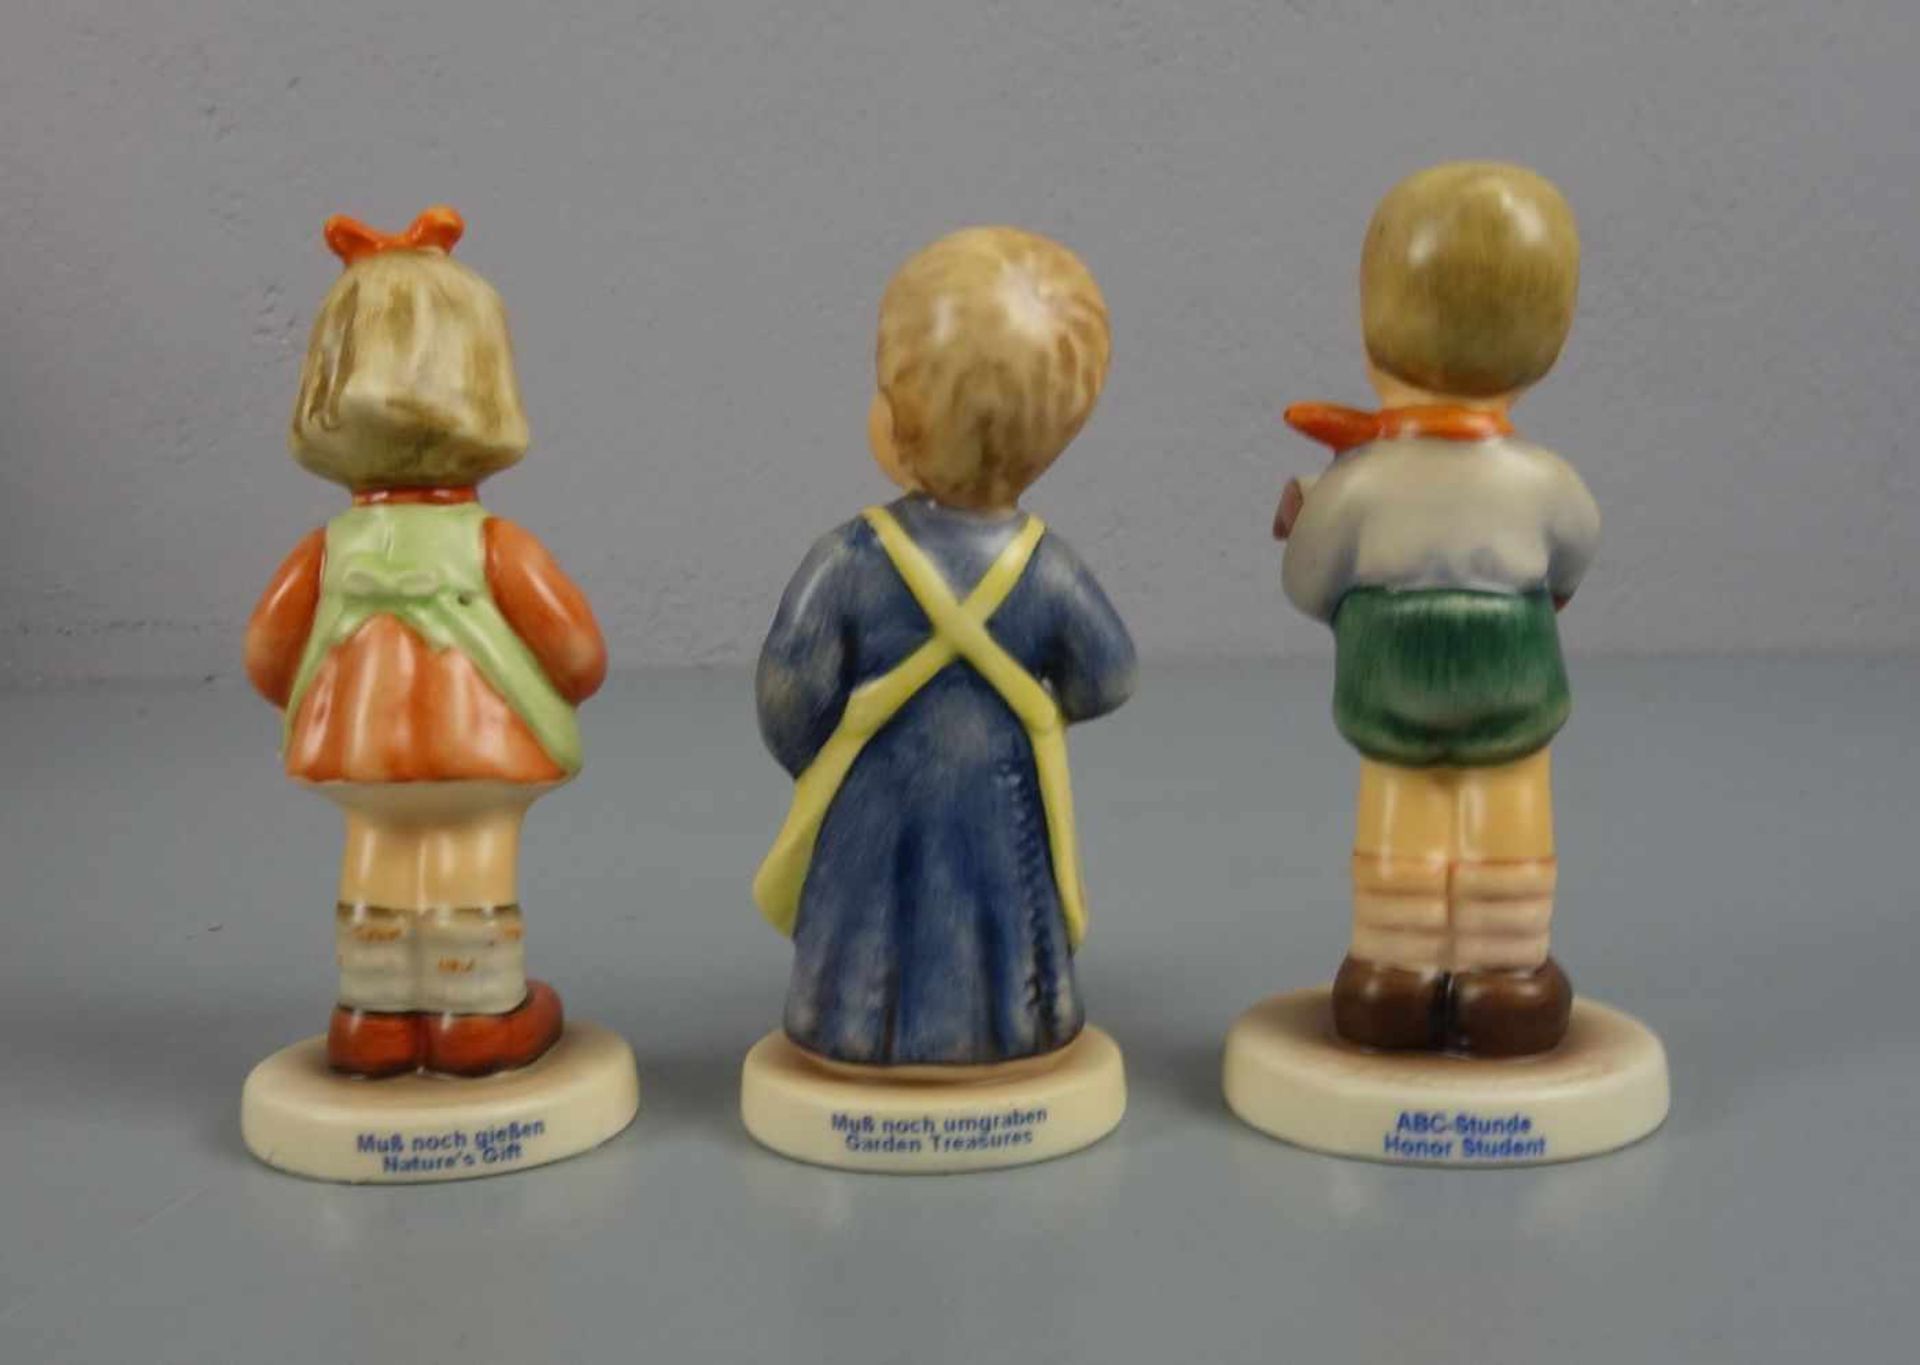 DREI HUMMELFIGUREN / porcelain figures: Goebel Hummel-Figuren, Marken nach 1991. "ABC Stunde": Ein - Image 4 of 6